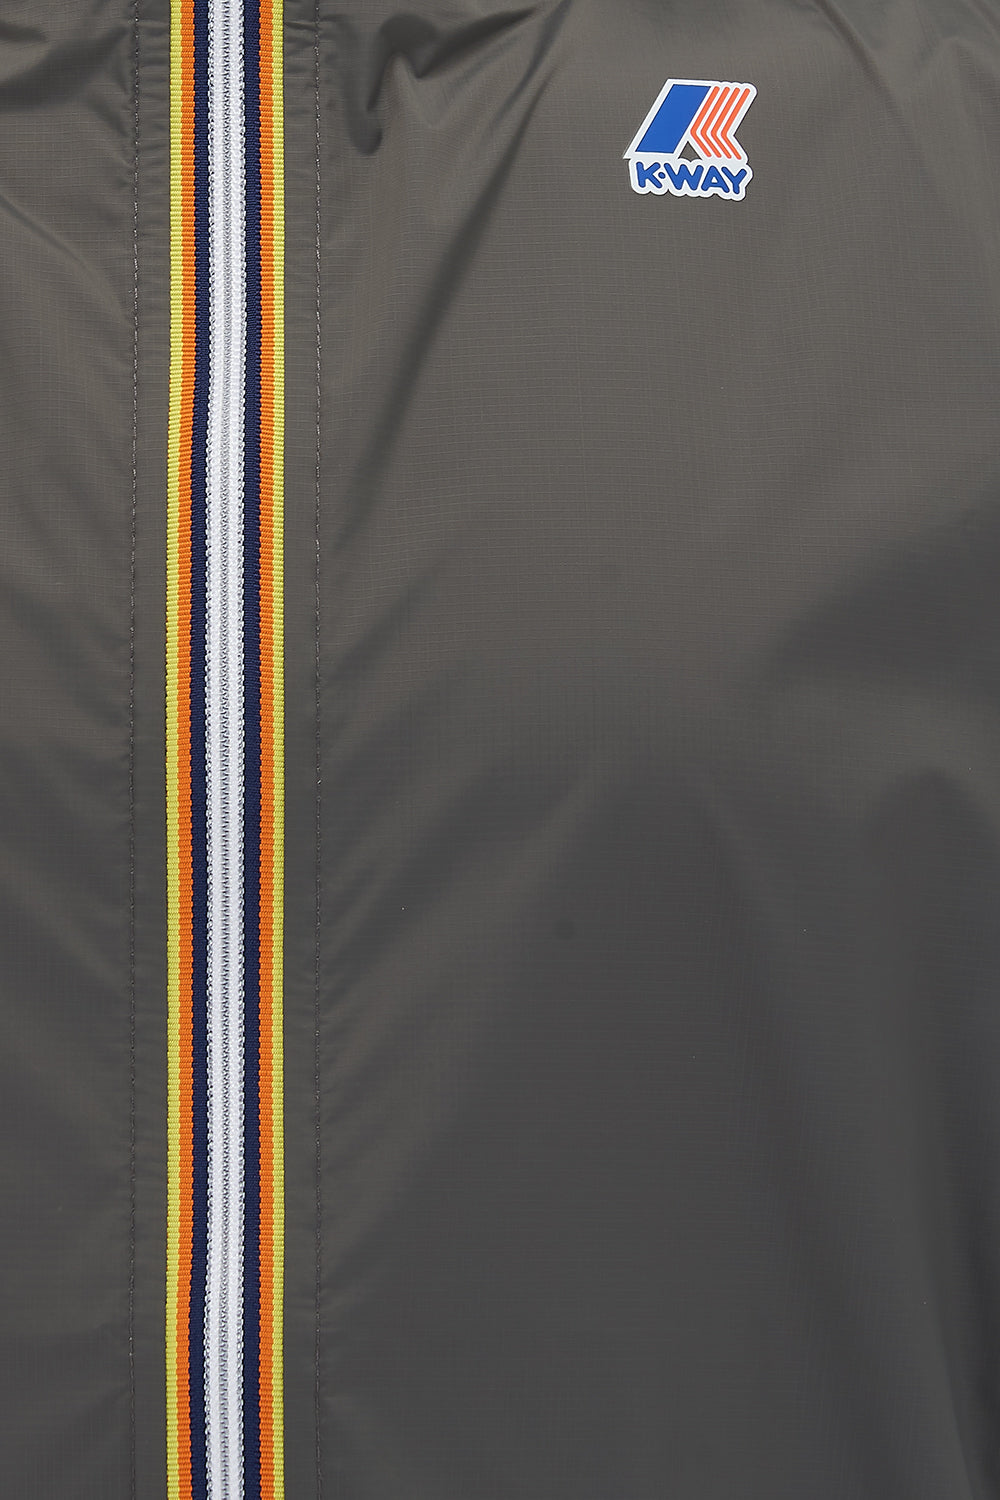 K-Way Le Vrai Claude 3.0 Men’s Windbreaker Jacket Grey - Close Up Zip